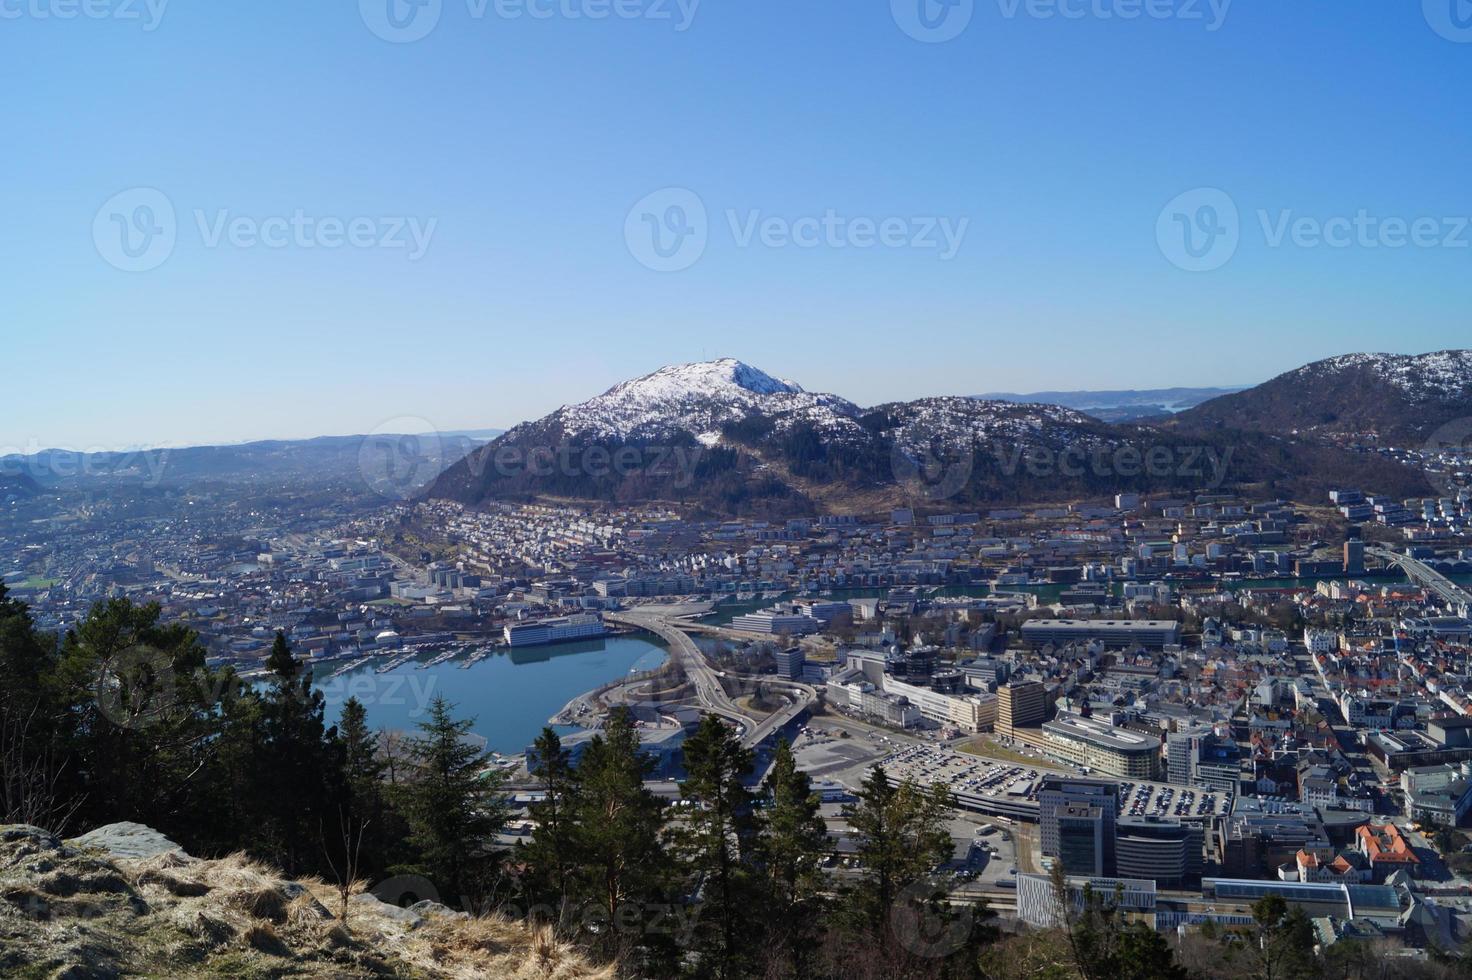 Bergen da perspectiva do Monte Floyen foto